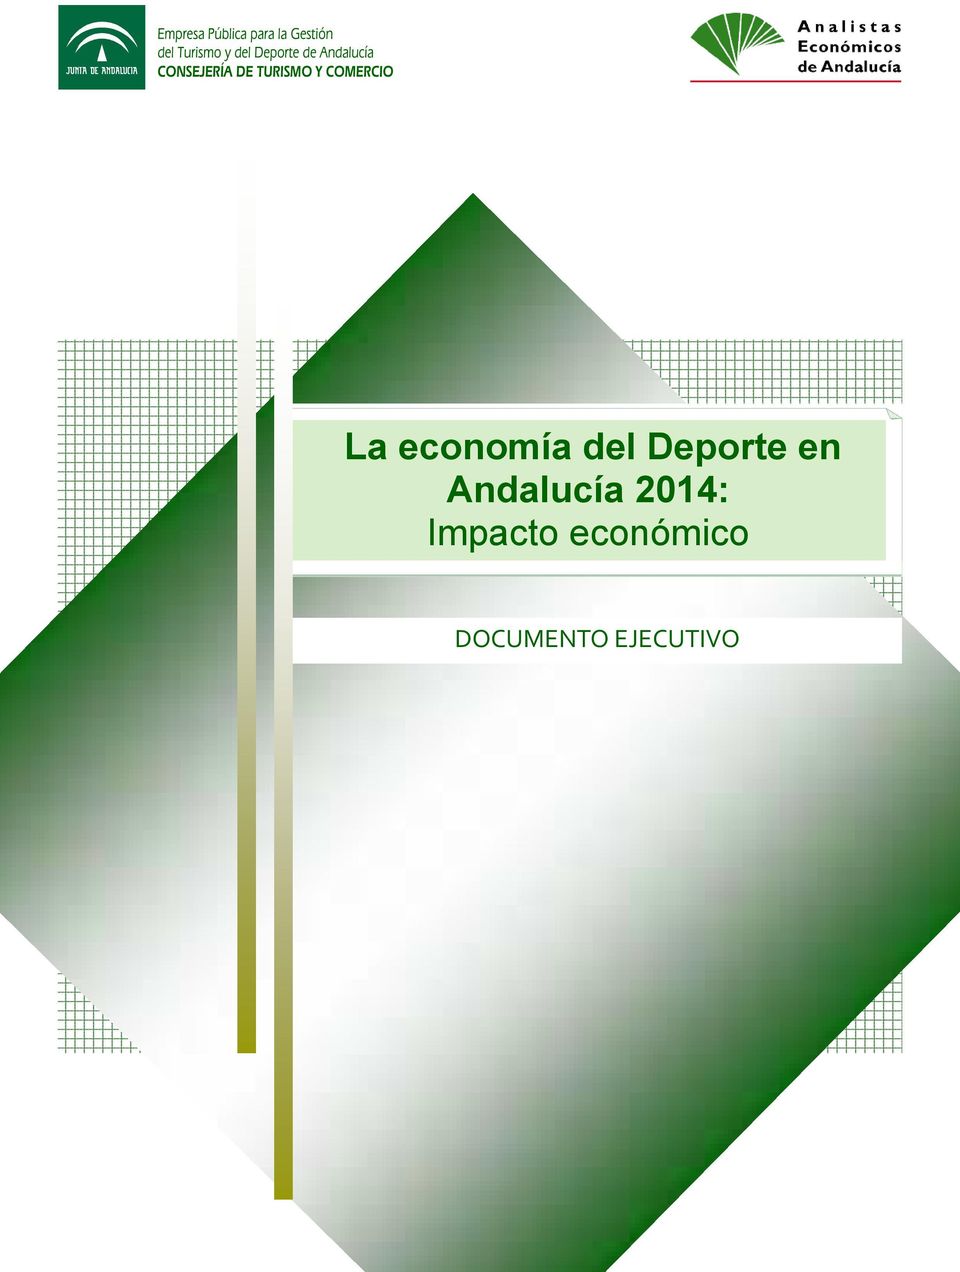 Andalucía 2014: